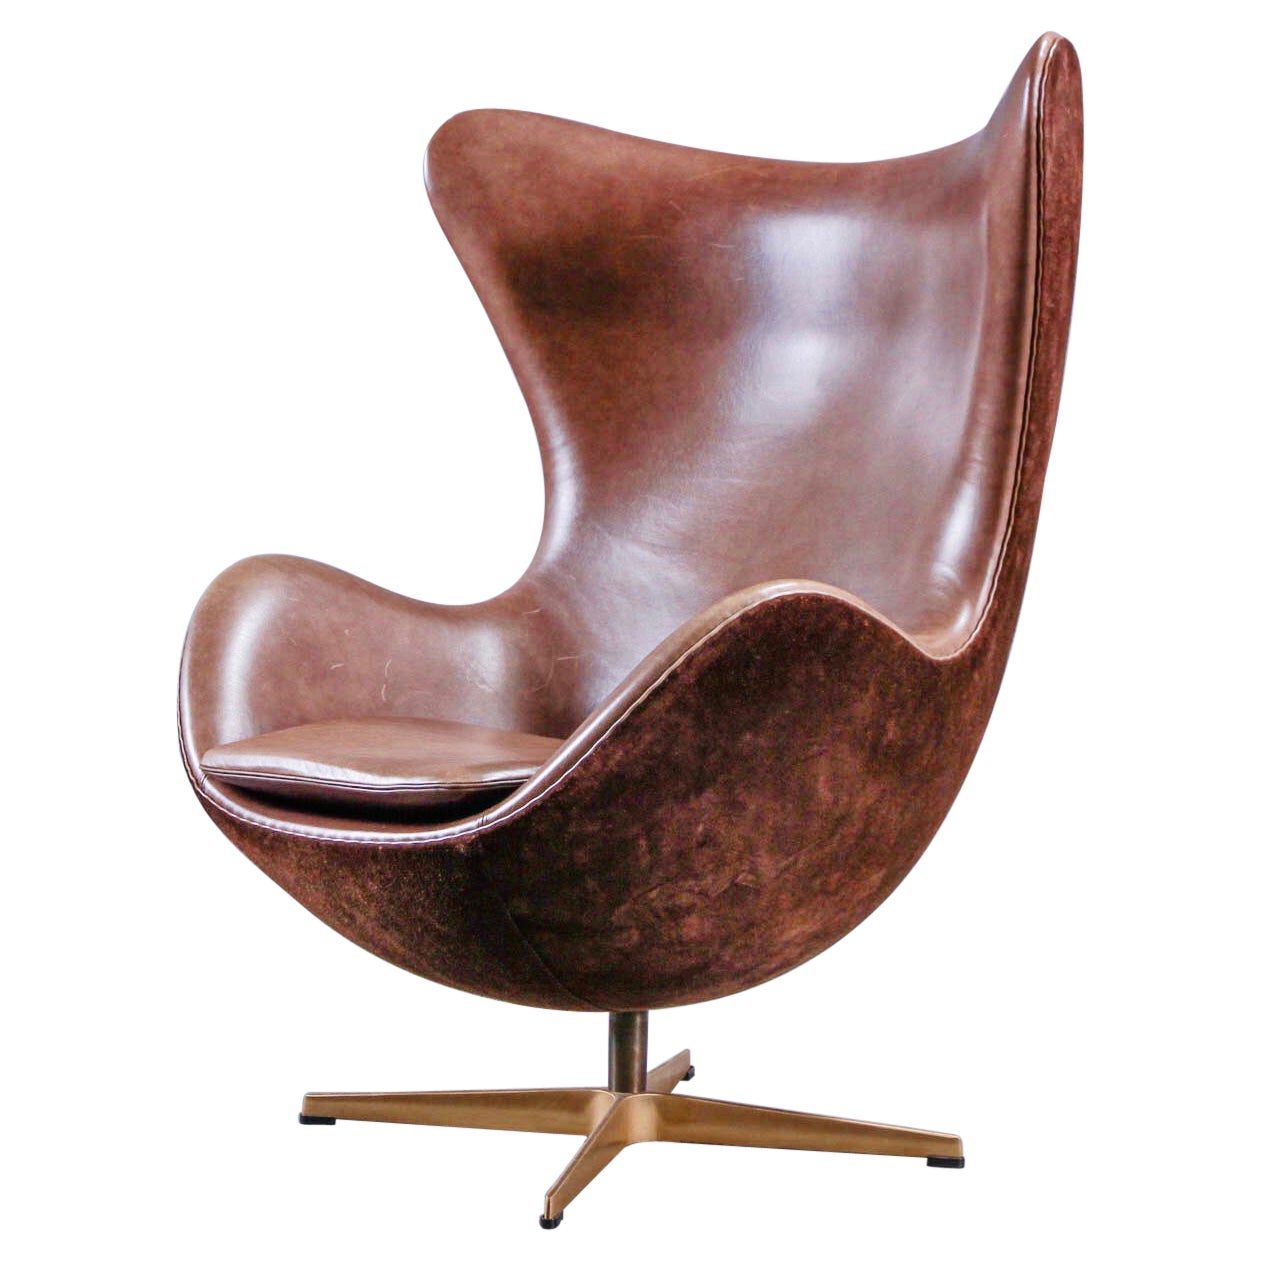 Arne Jacobsen ‘Golden Egg Chair’ by Fritz Hansen in Denmark, Numbered Edition